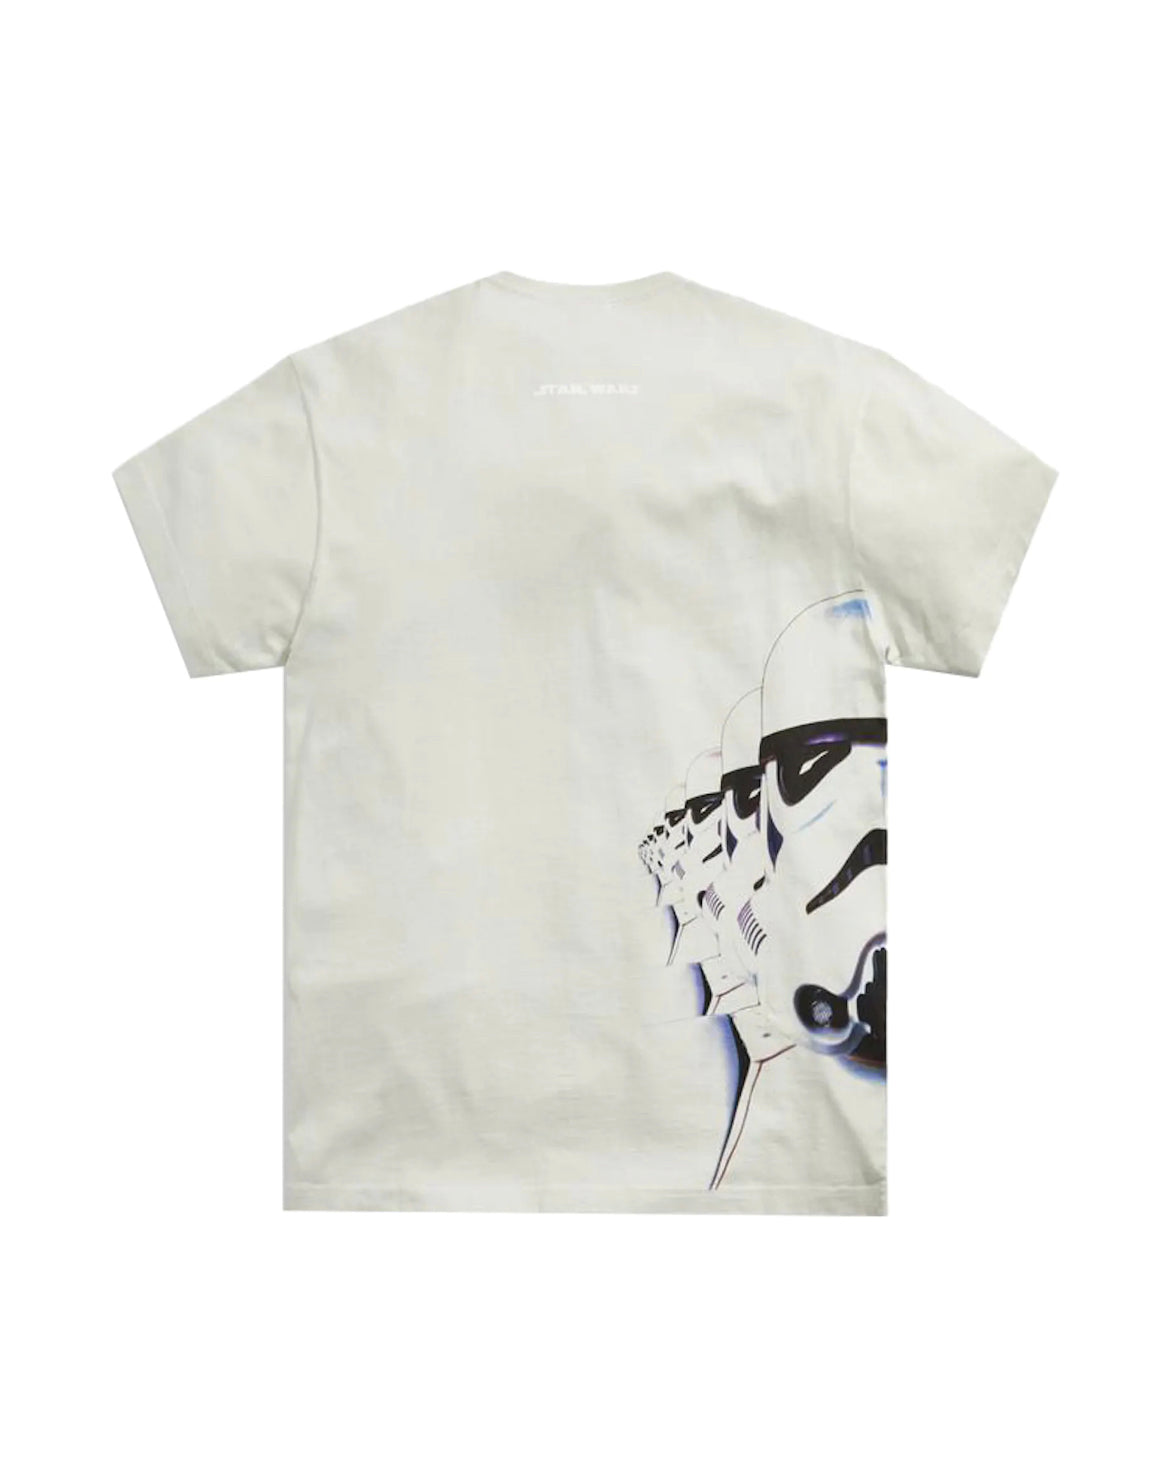 Kith x Star Wars ‘Storm Trooper’ Vintage Tee Chalk